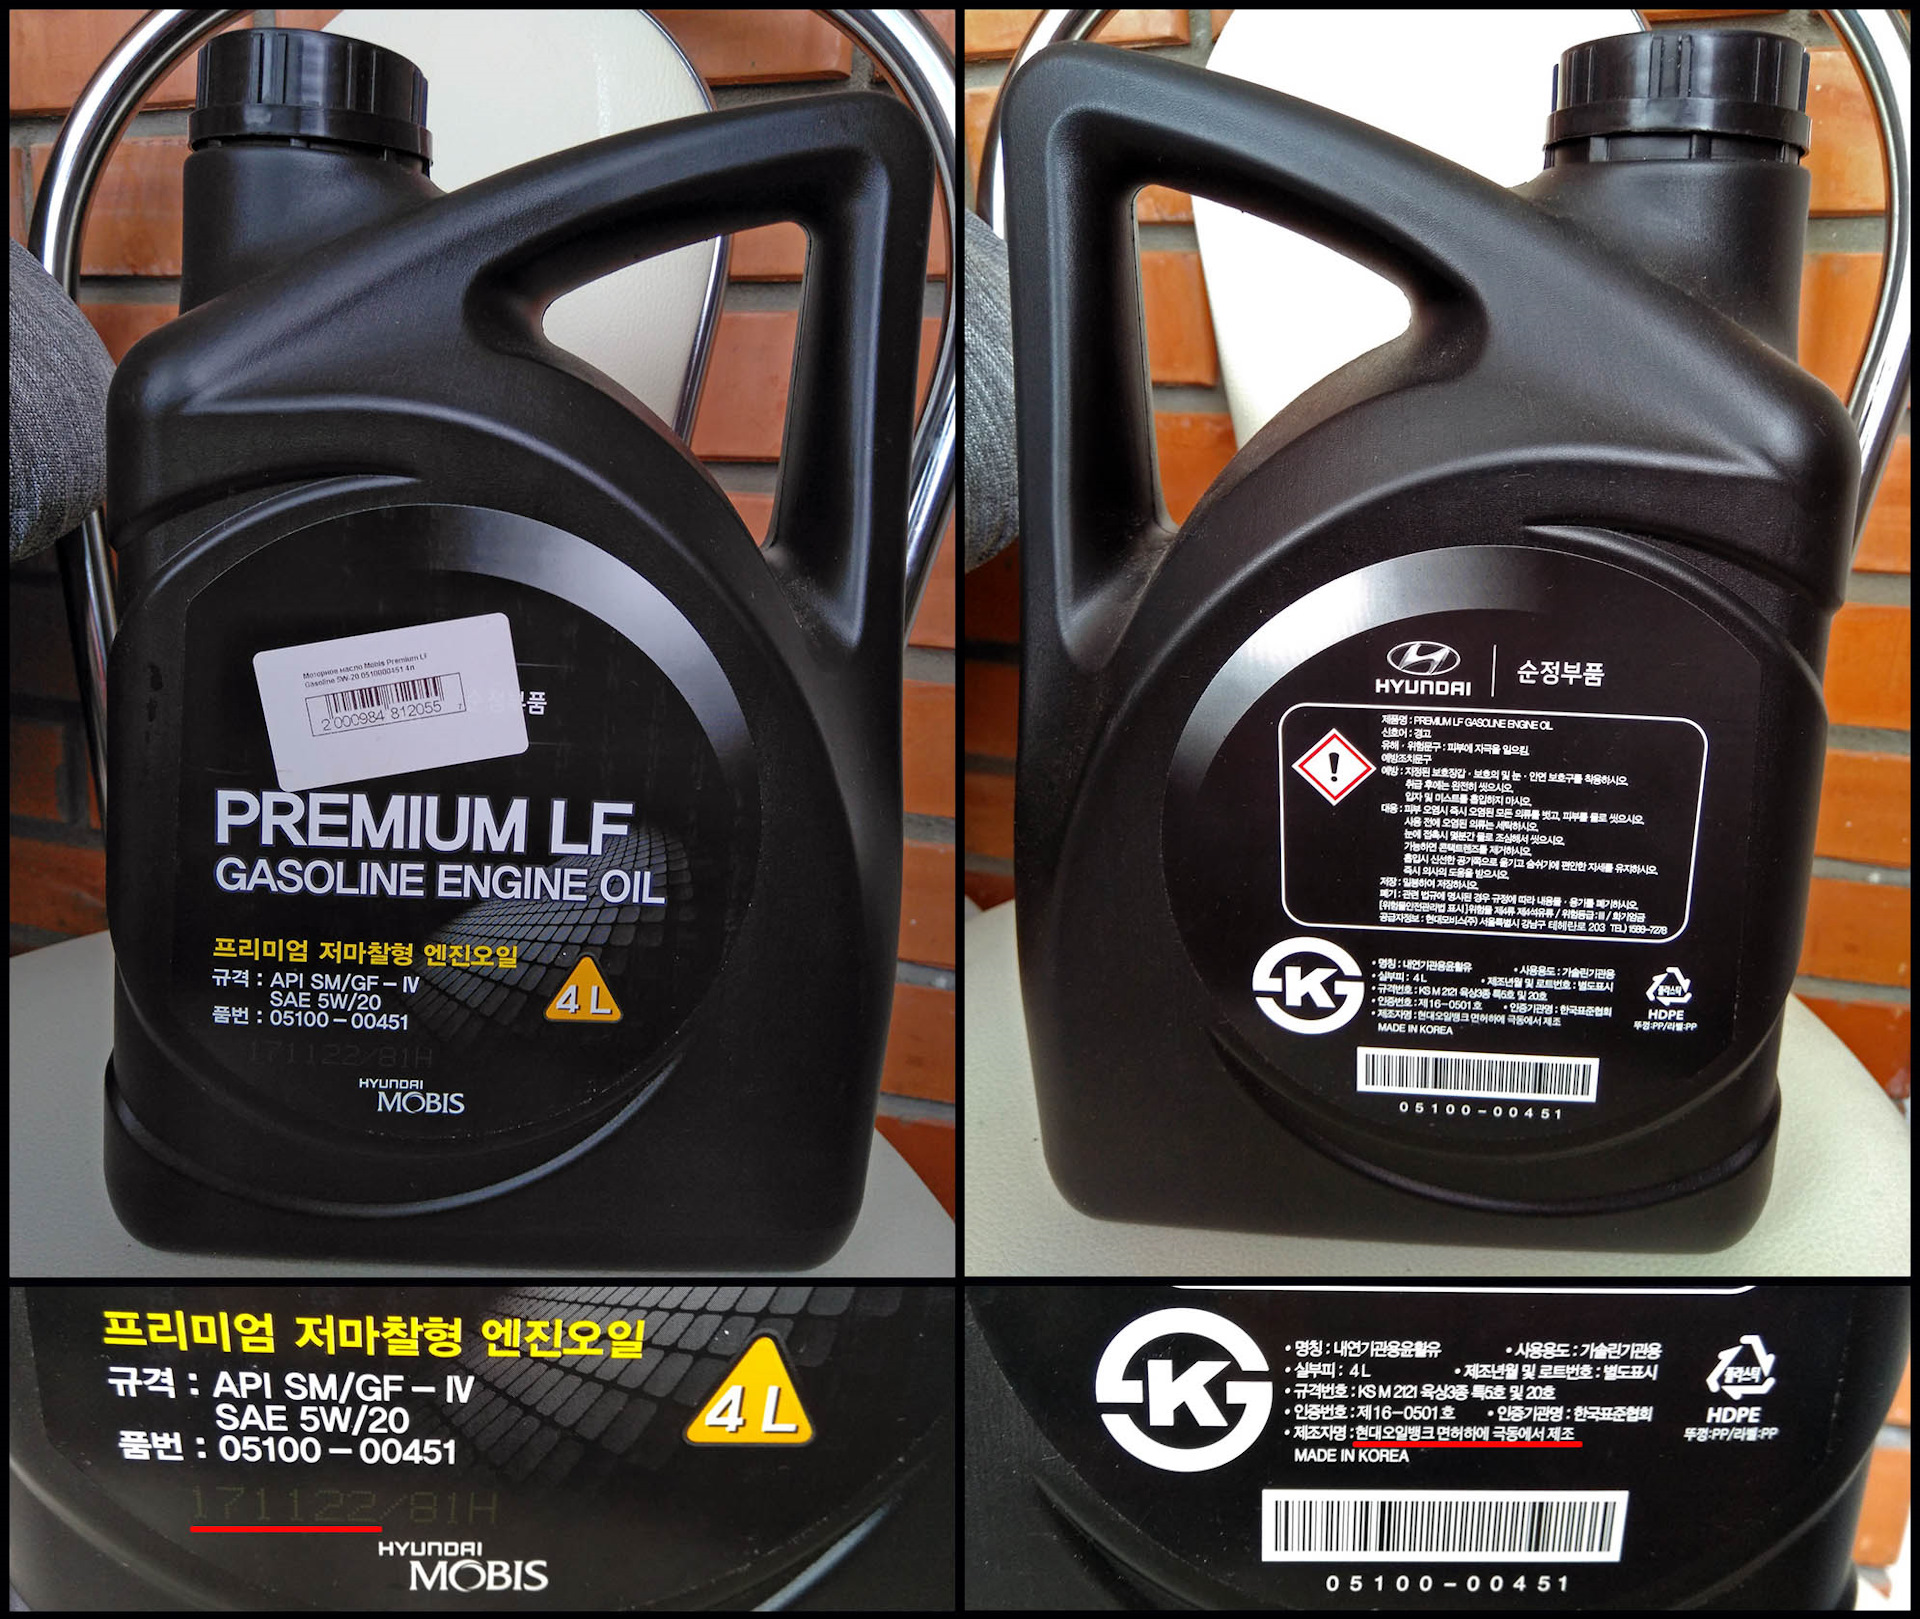 Масло хендай крета 5w30. Premium LF gasoline (5w40). Premium LF gasoline 5w-20. Масло Hyundai mobis Premium LF gasoline 5w20 1l (Корея). Premium LF gasoline engine Oil 5w20 оригинал.